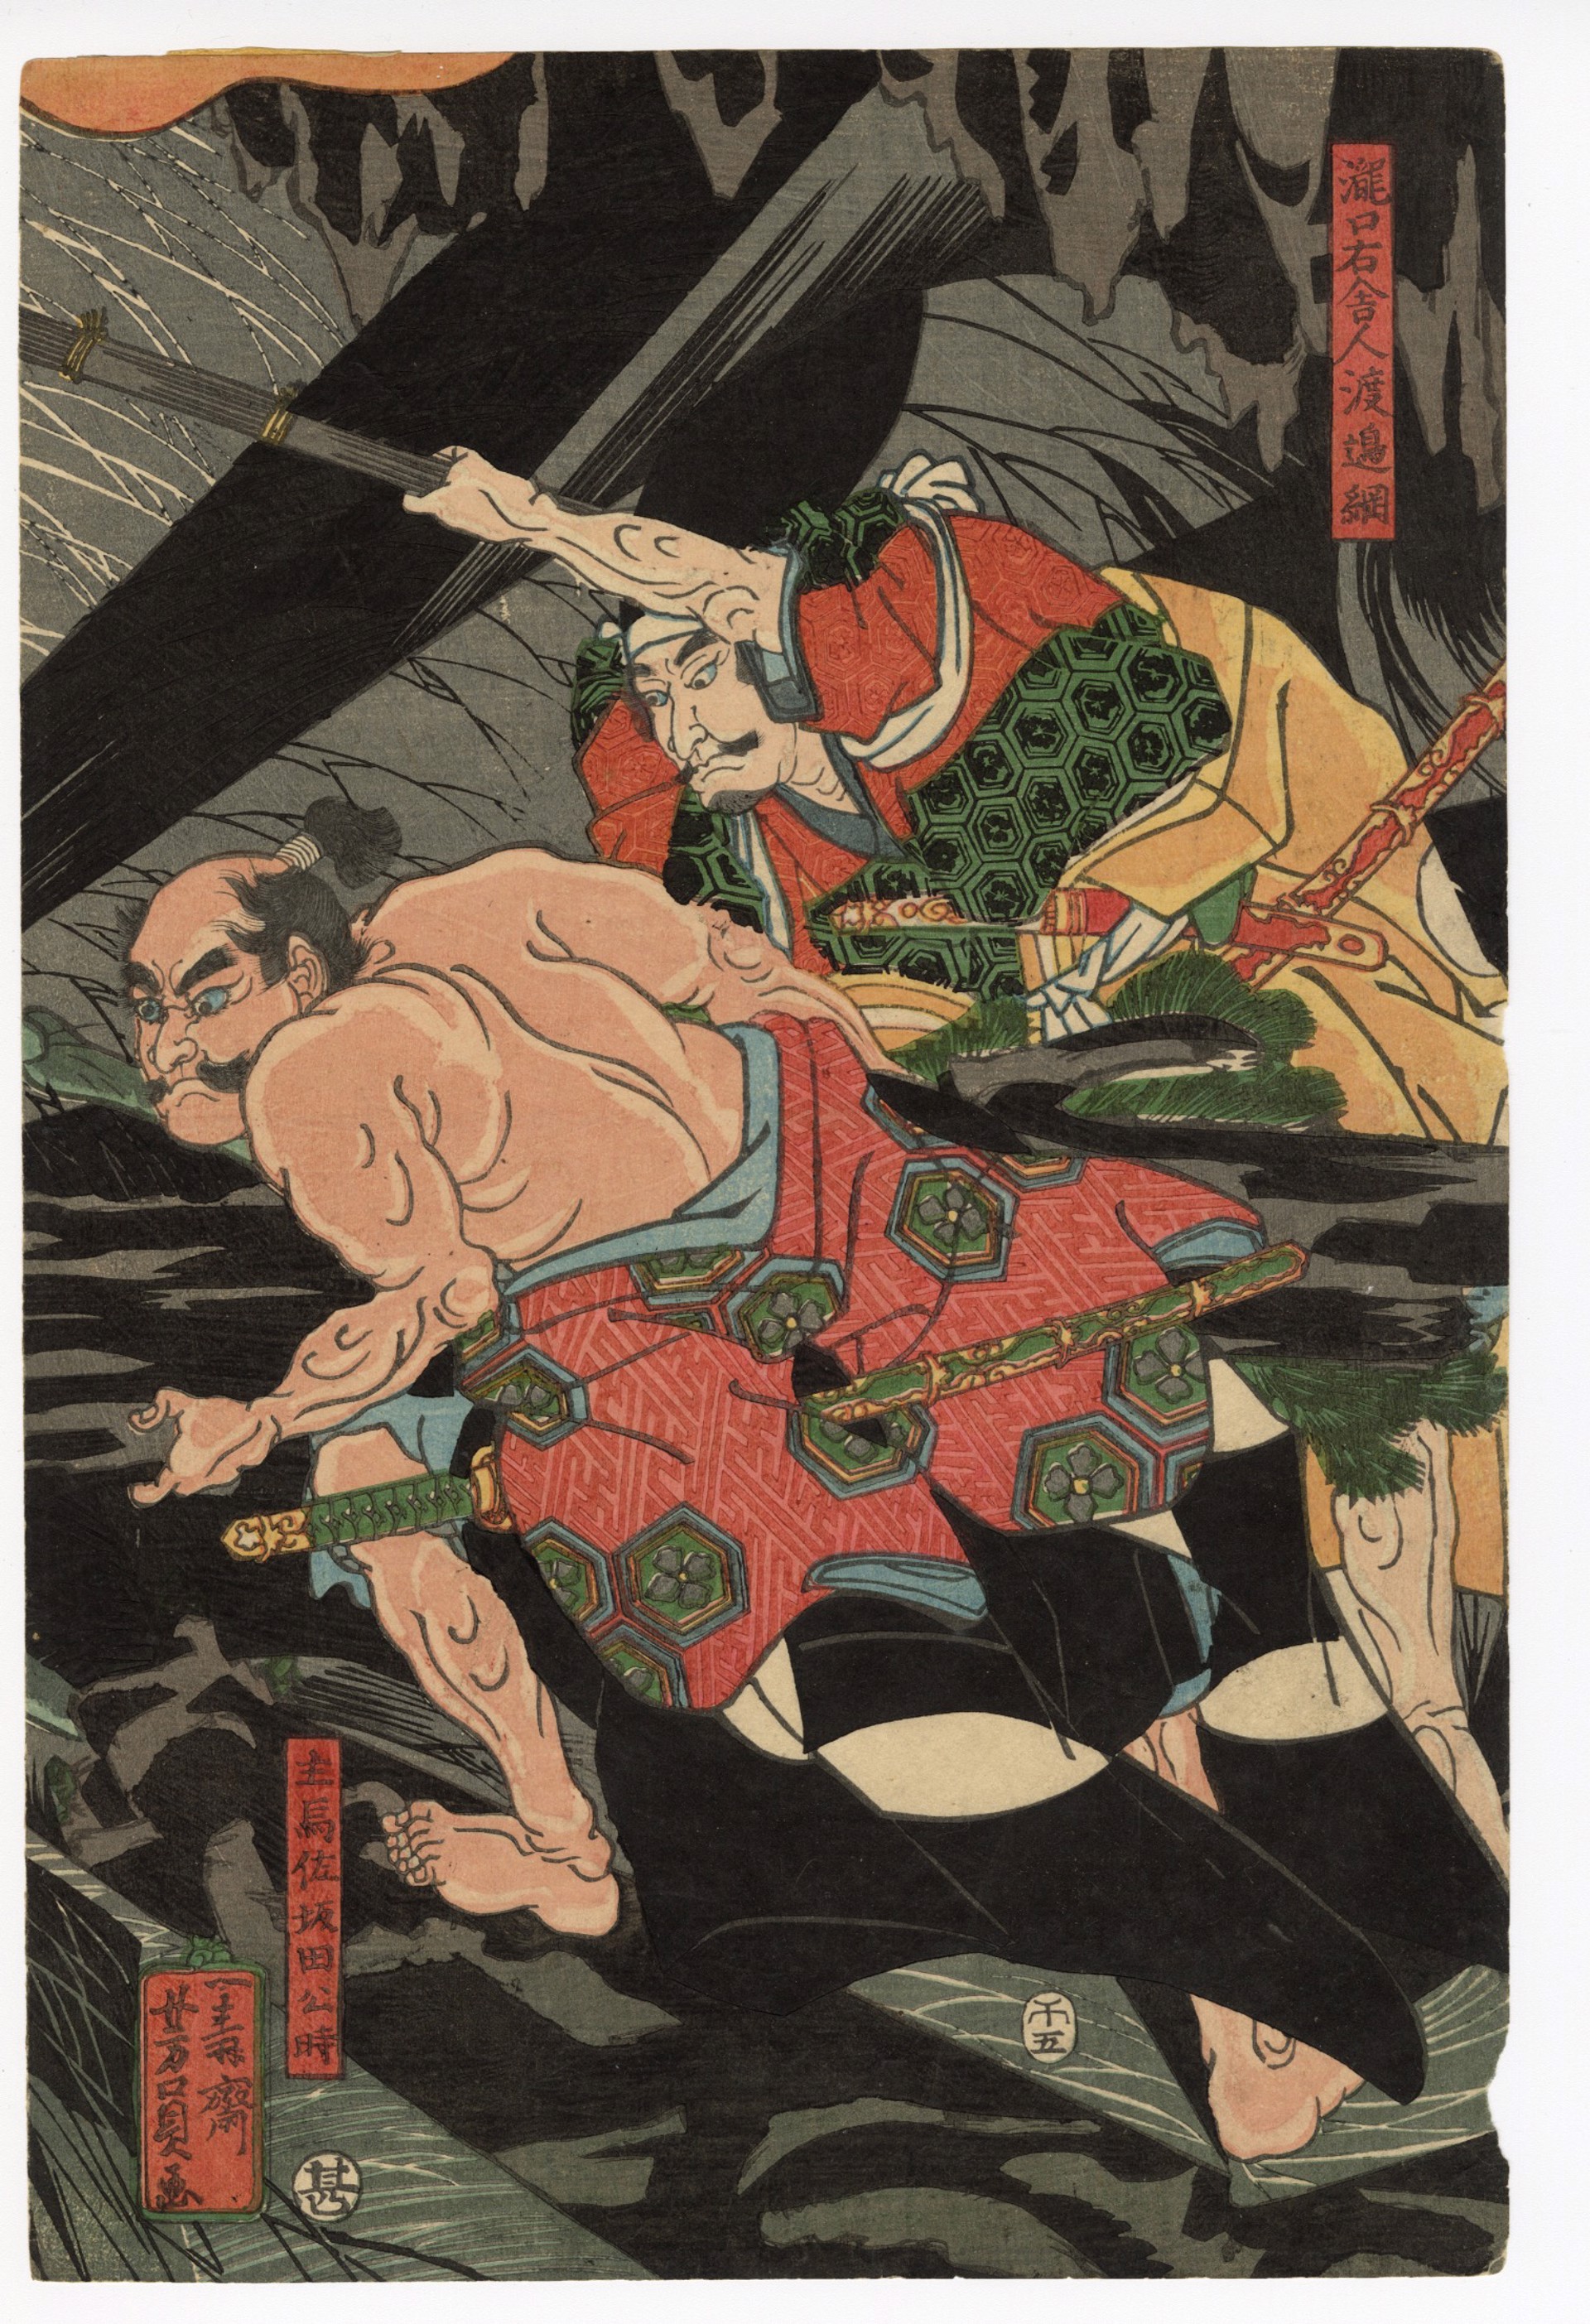 Minamoto no Yorimitsu, also known as Raiko, and his Loyal Retainers Killing the Giant Earth Spider by Yoshikazu